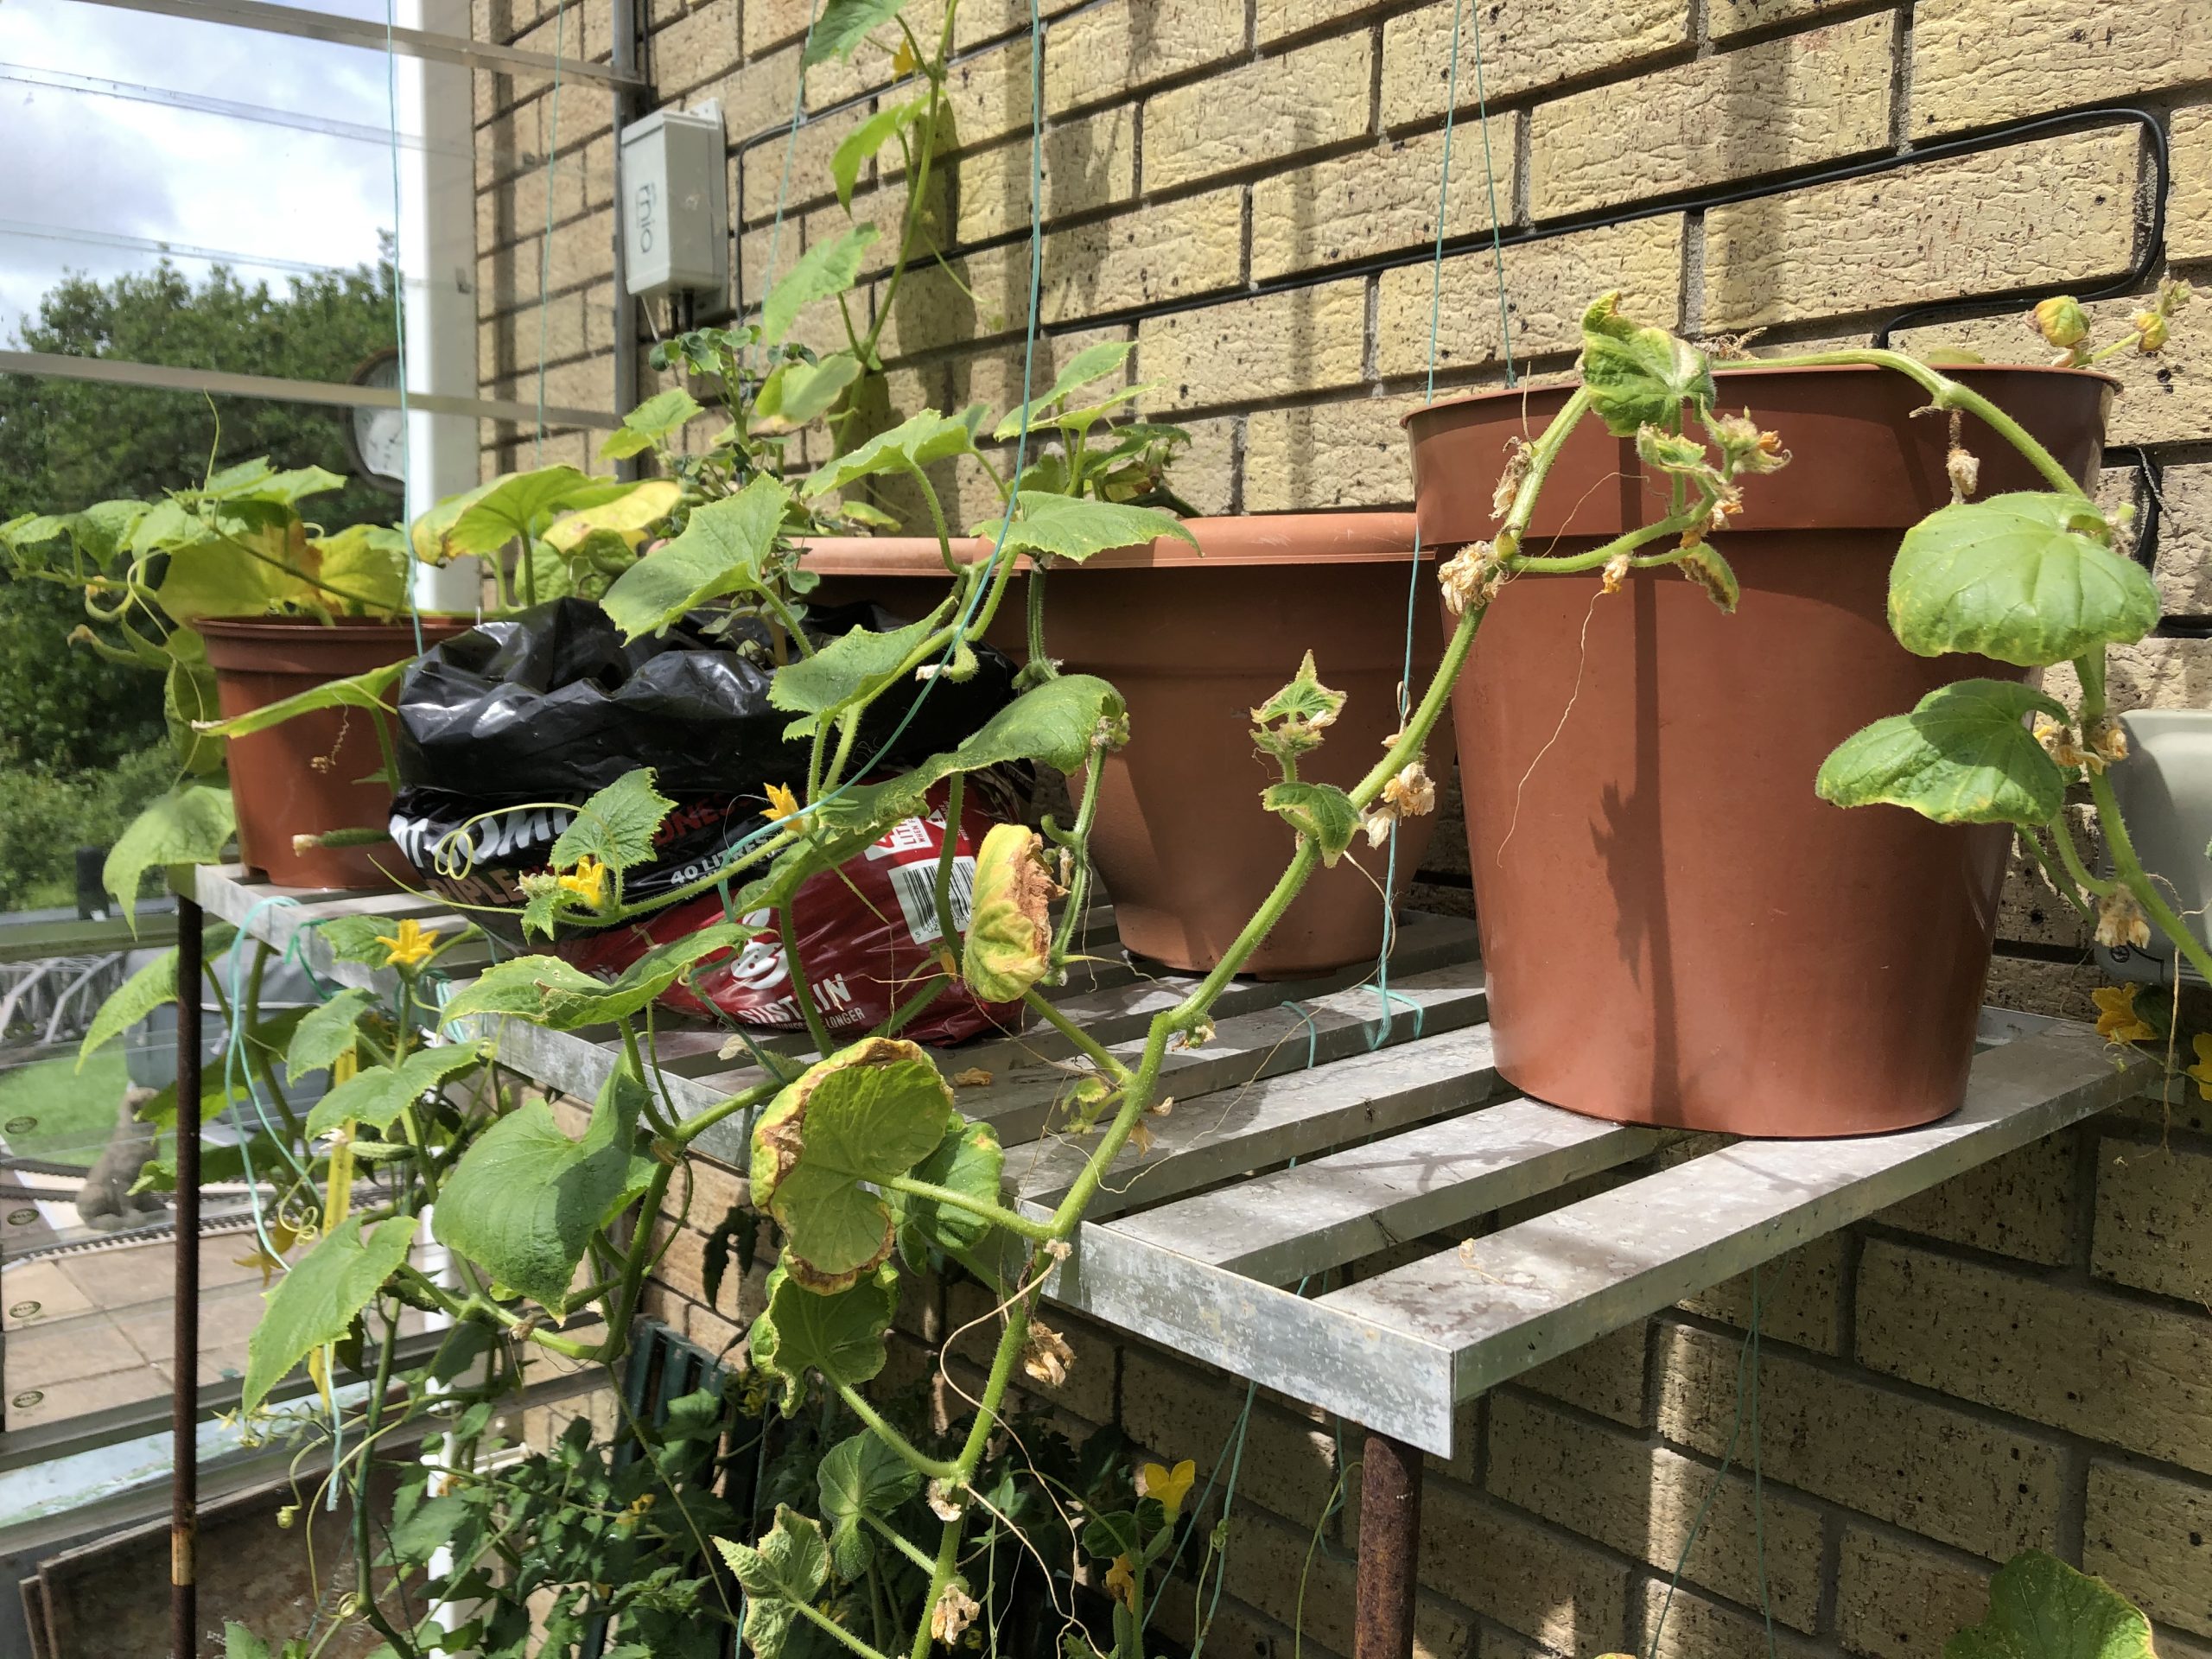 cucumber plants growing in pots 28/6/20